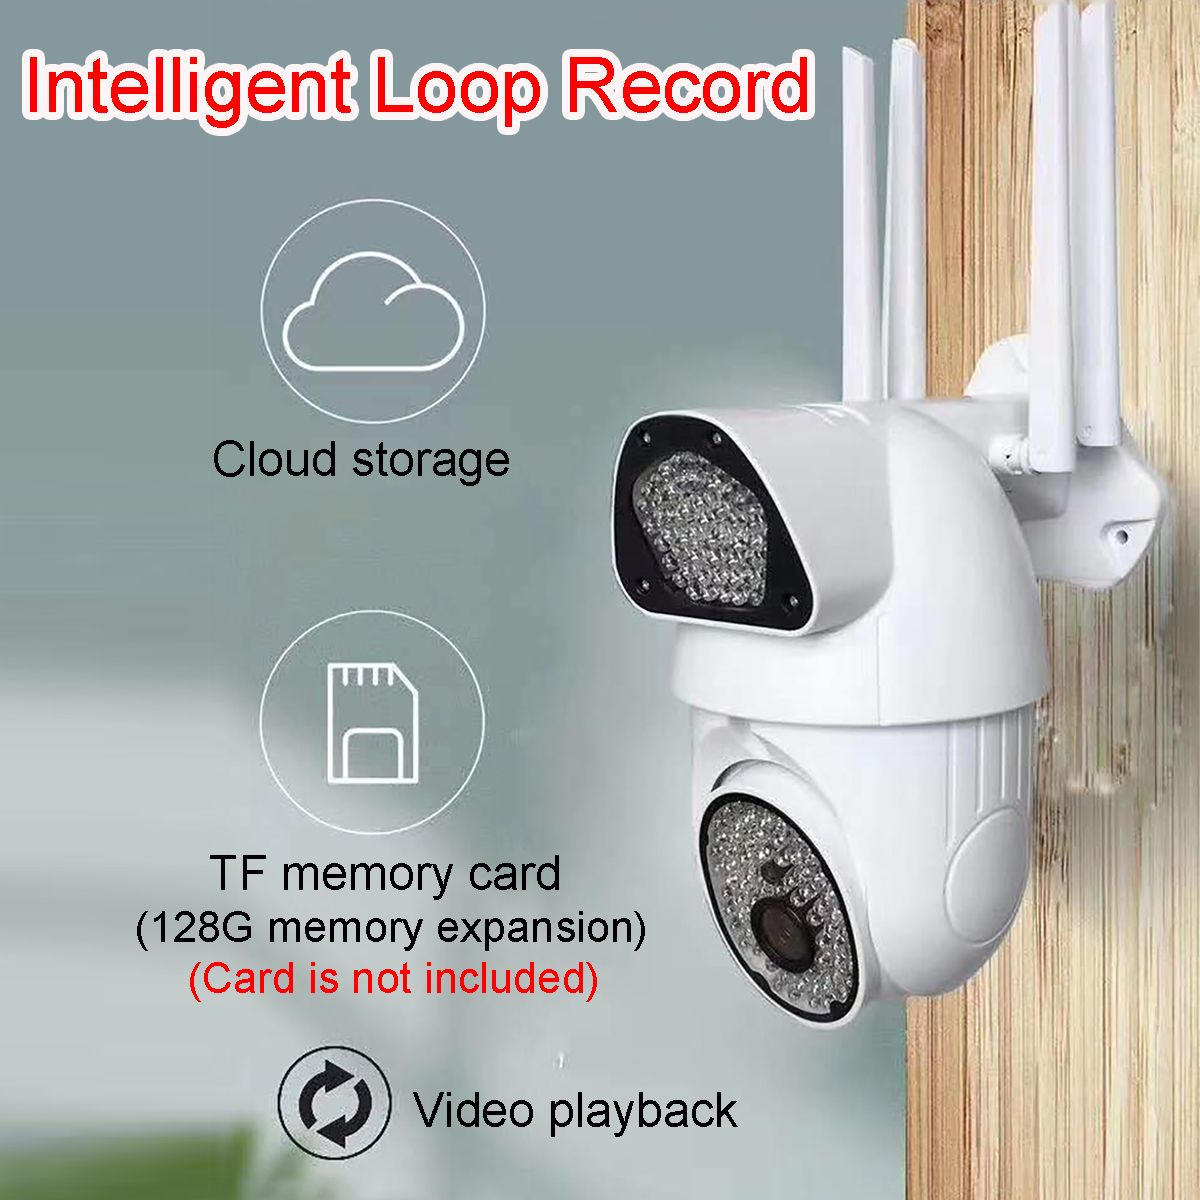 1080P-Wireless-Wifi-IP-Security-Camera-PIR-Alarm-Remote-Monitor-135-LED-Light-IP-Camera-1731111